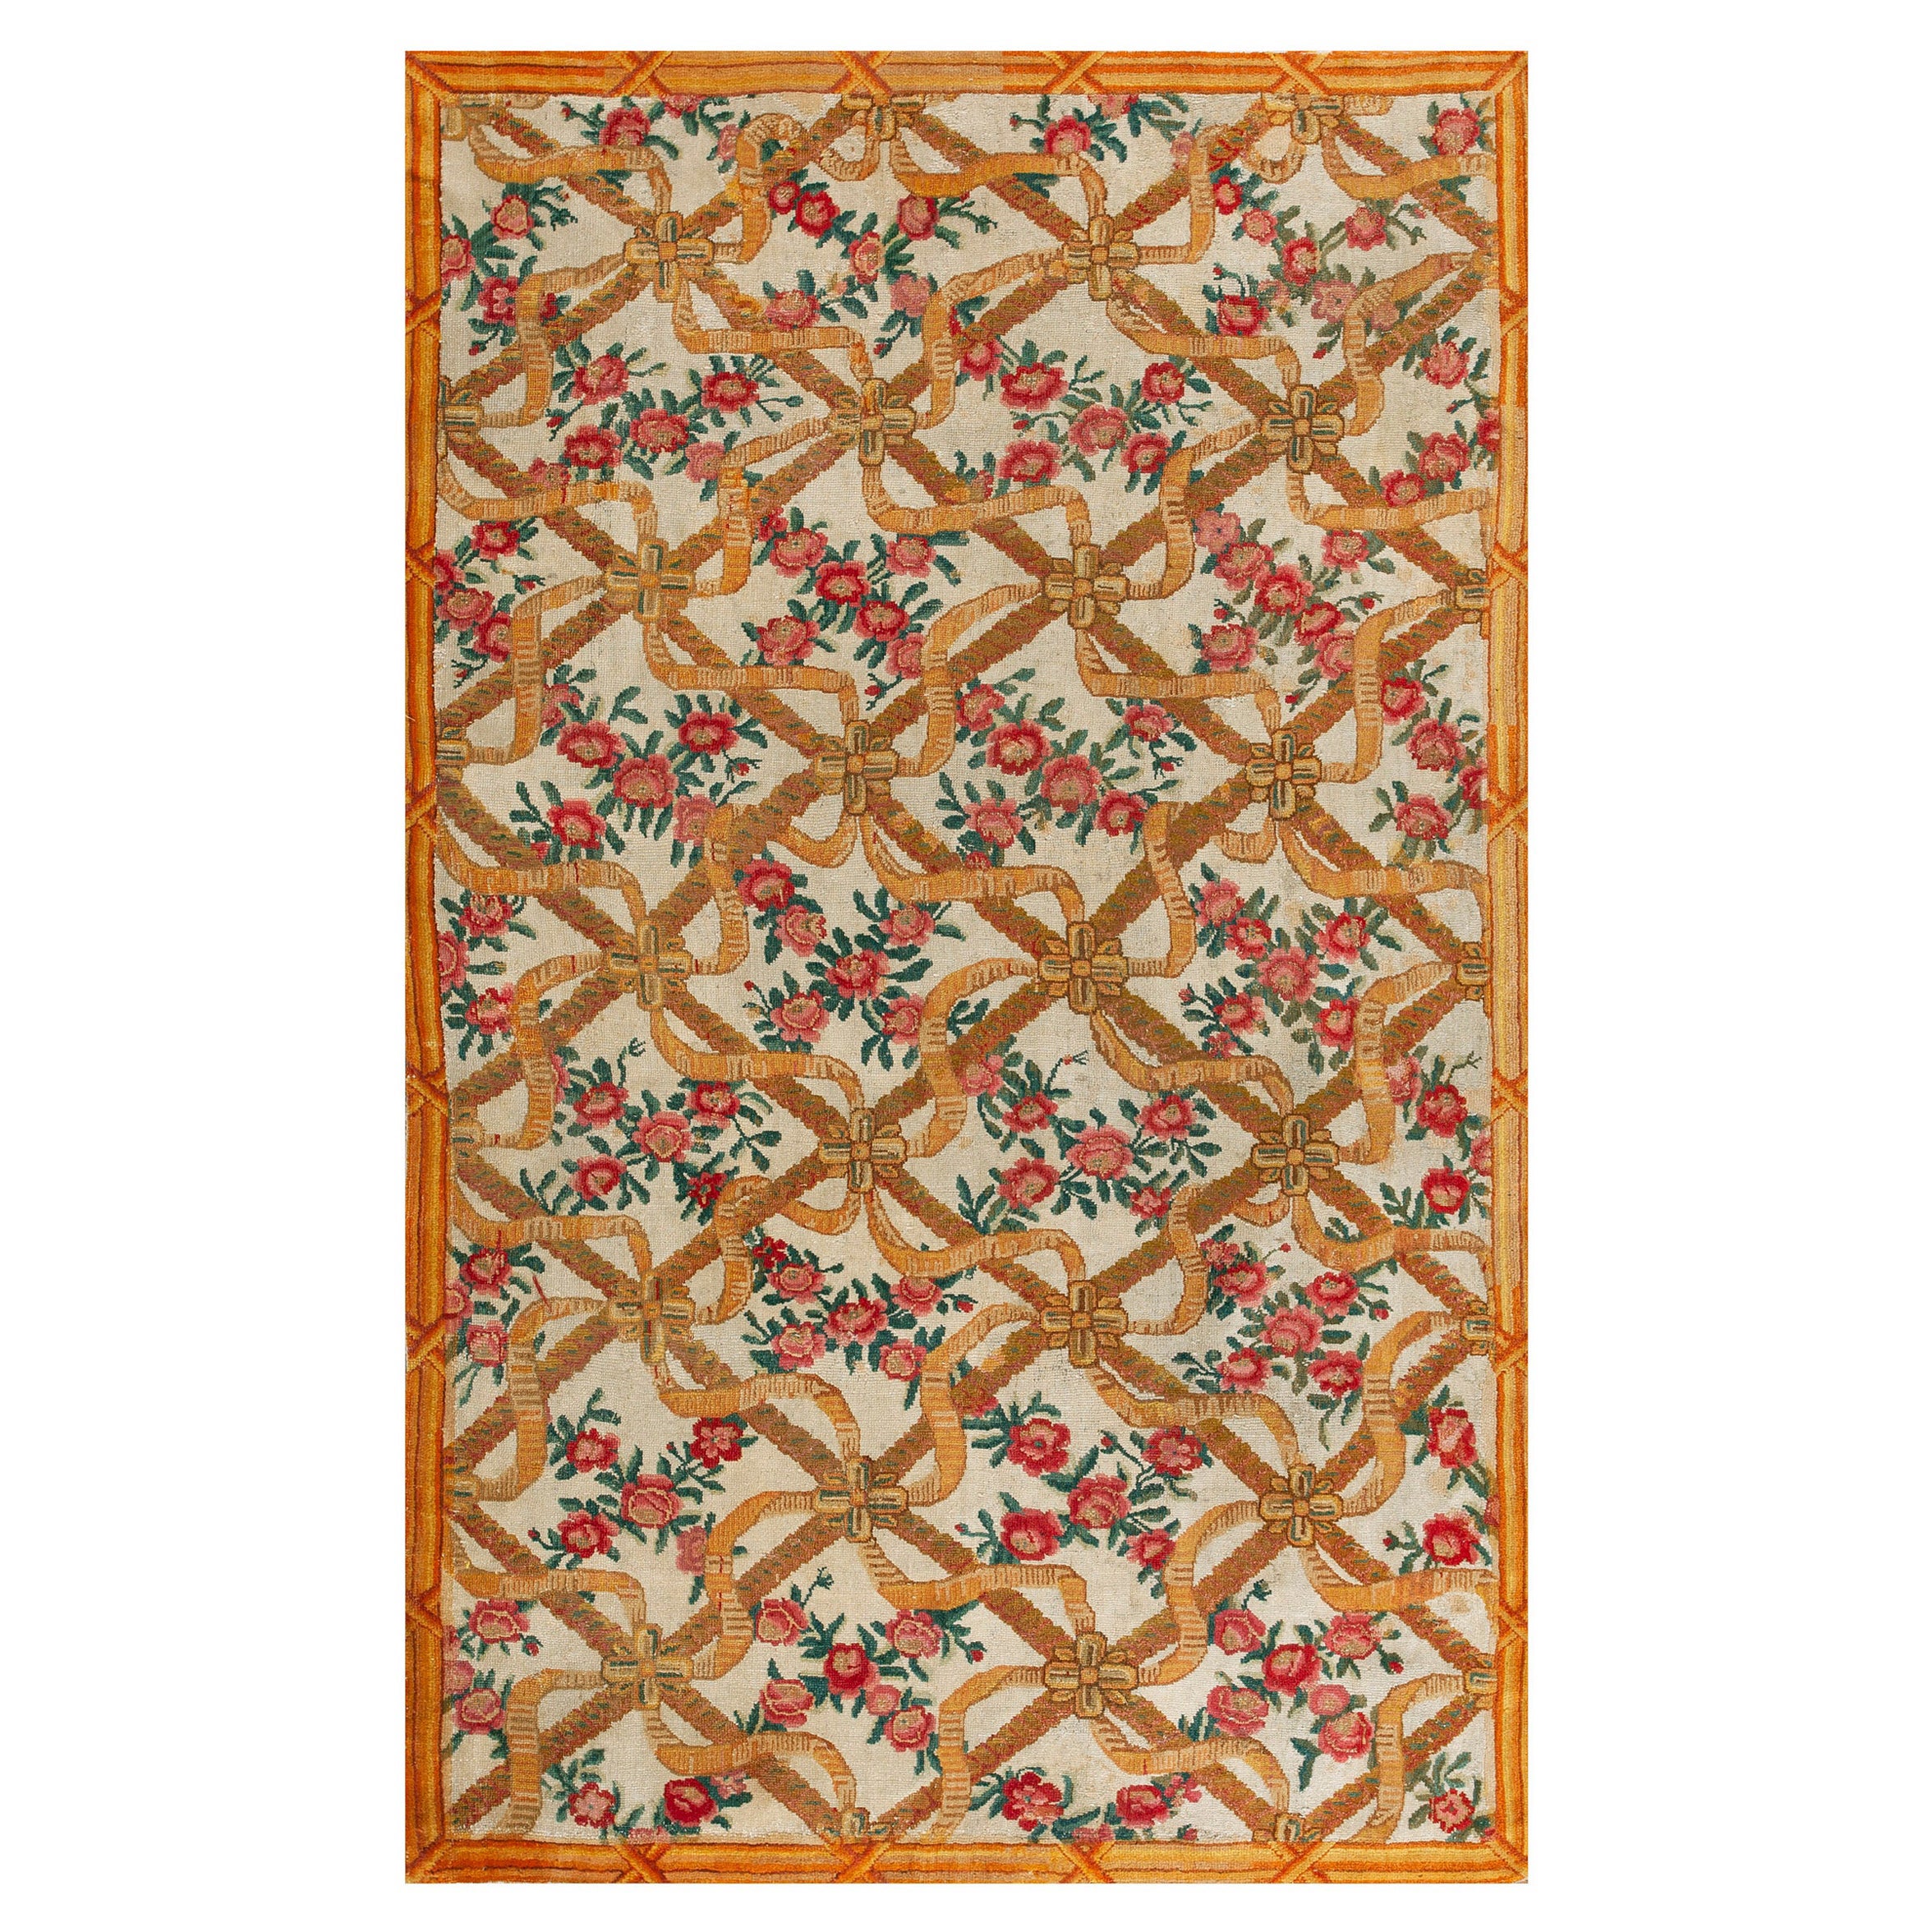 18th Century French Savonnerie Carpet ( 5'6" x 8'10" - 168 x 269 )